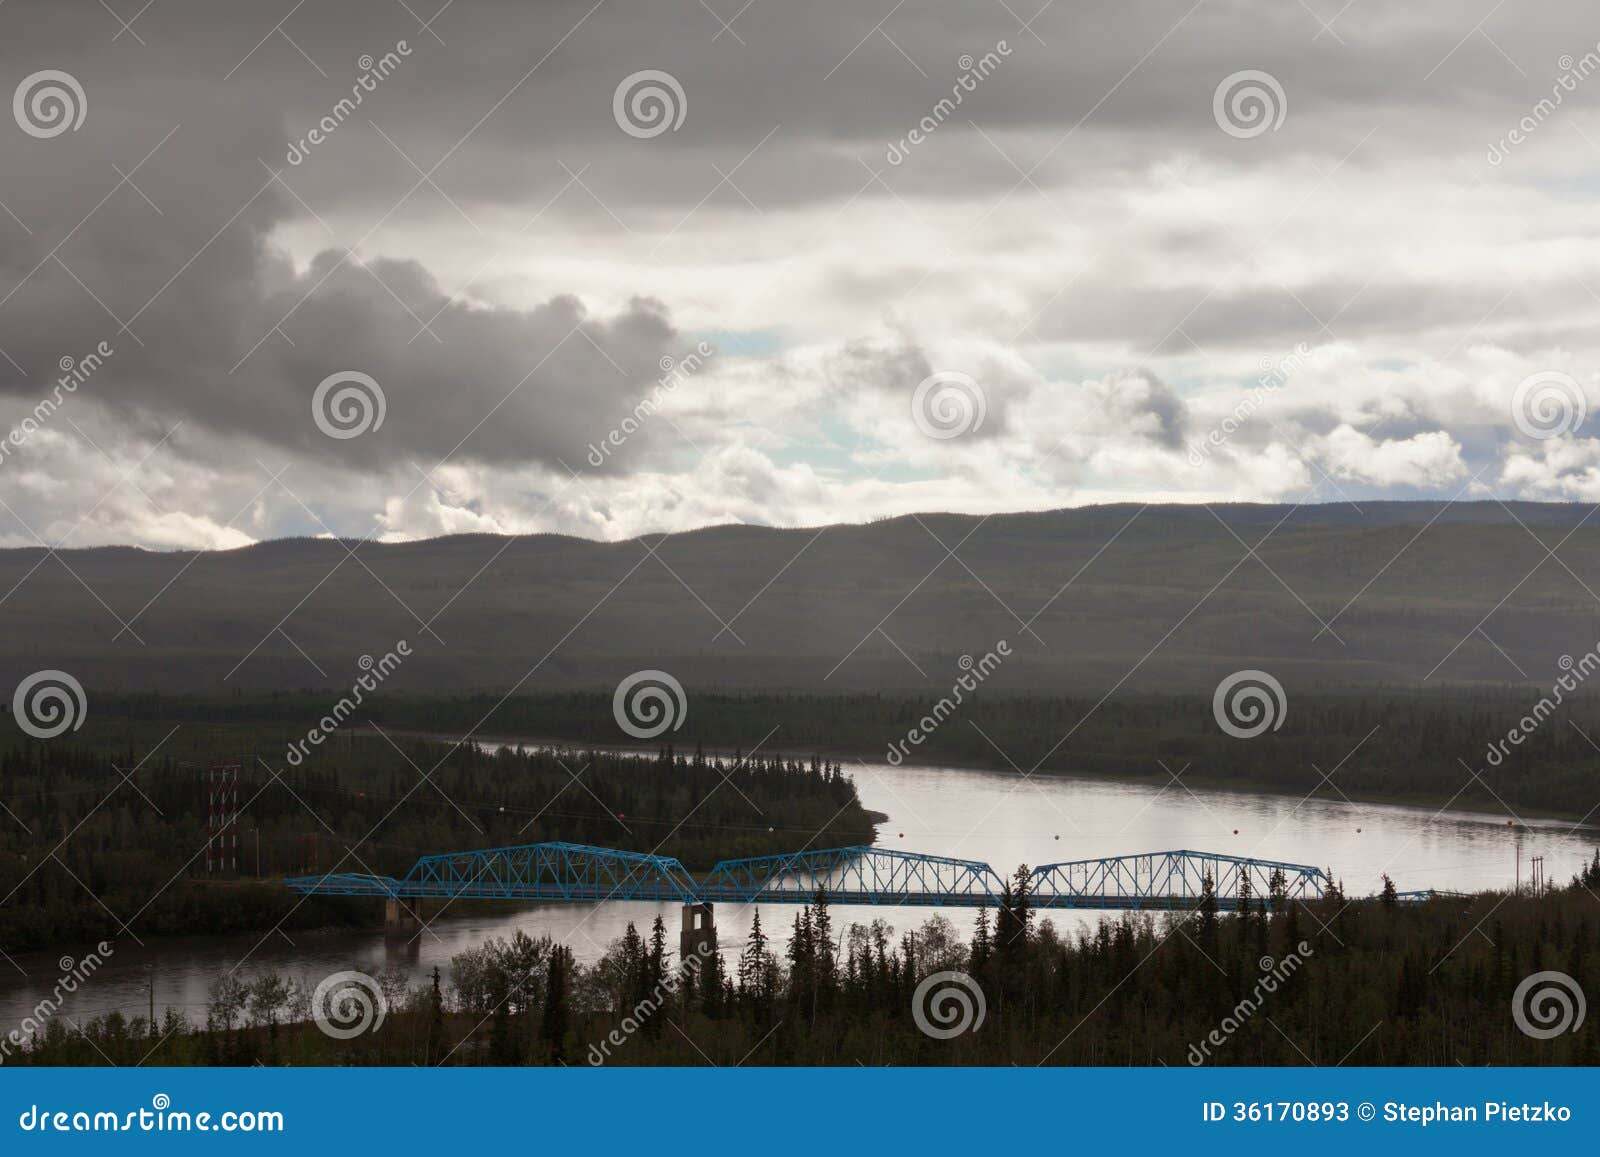 pelly crossing river bridge yukon territory canada